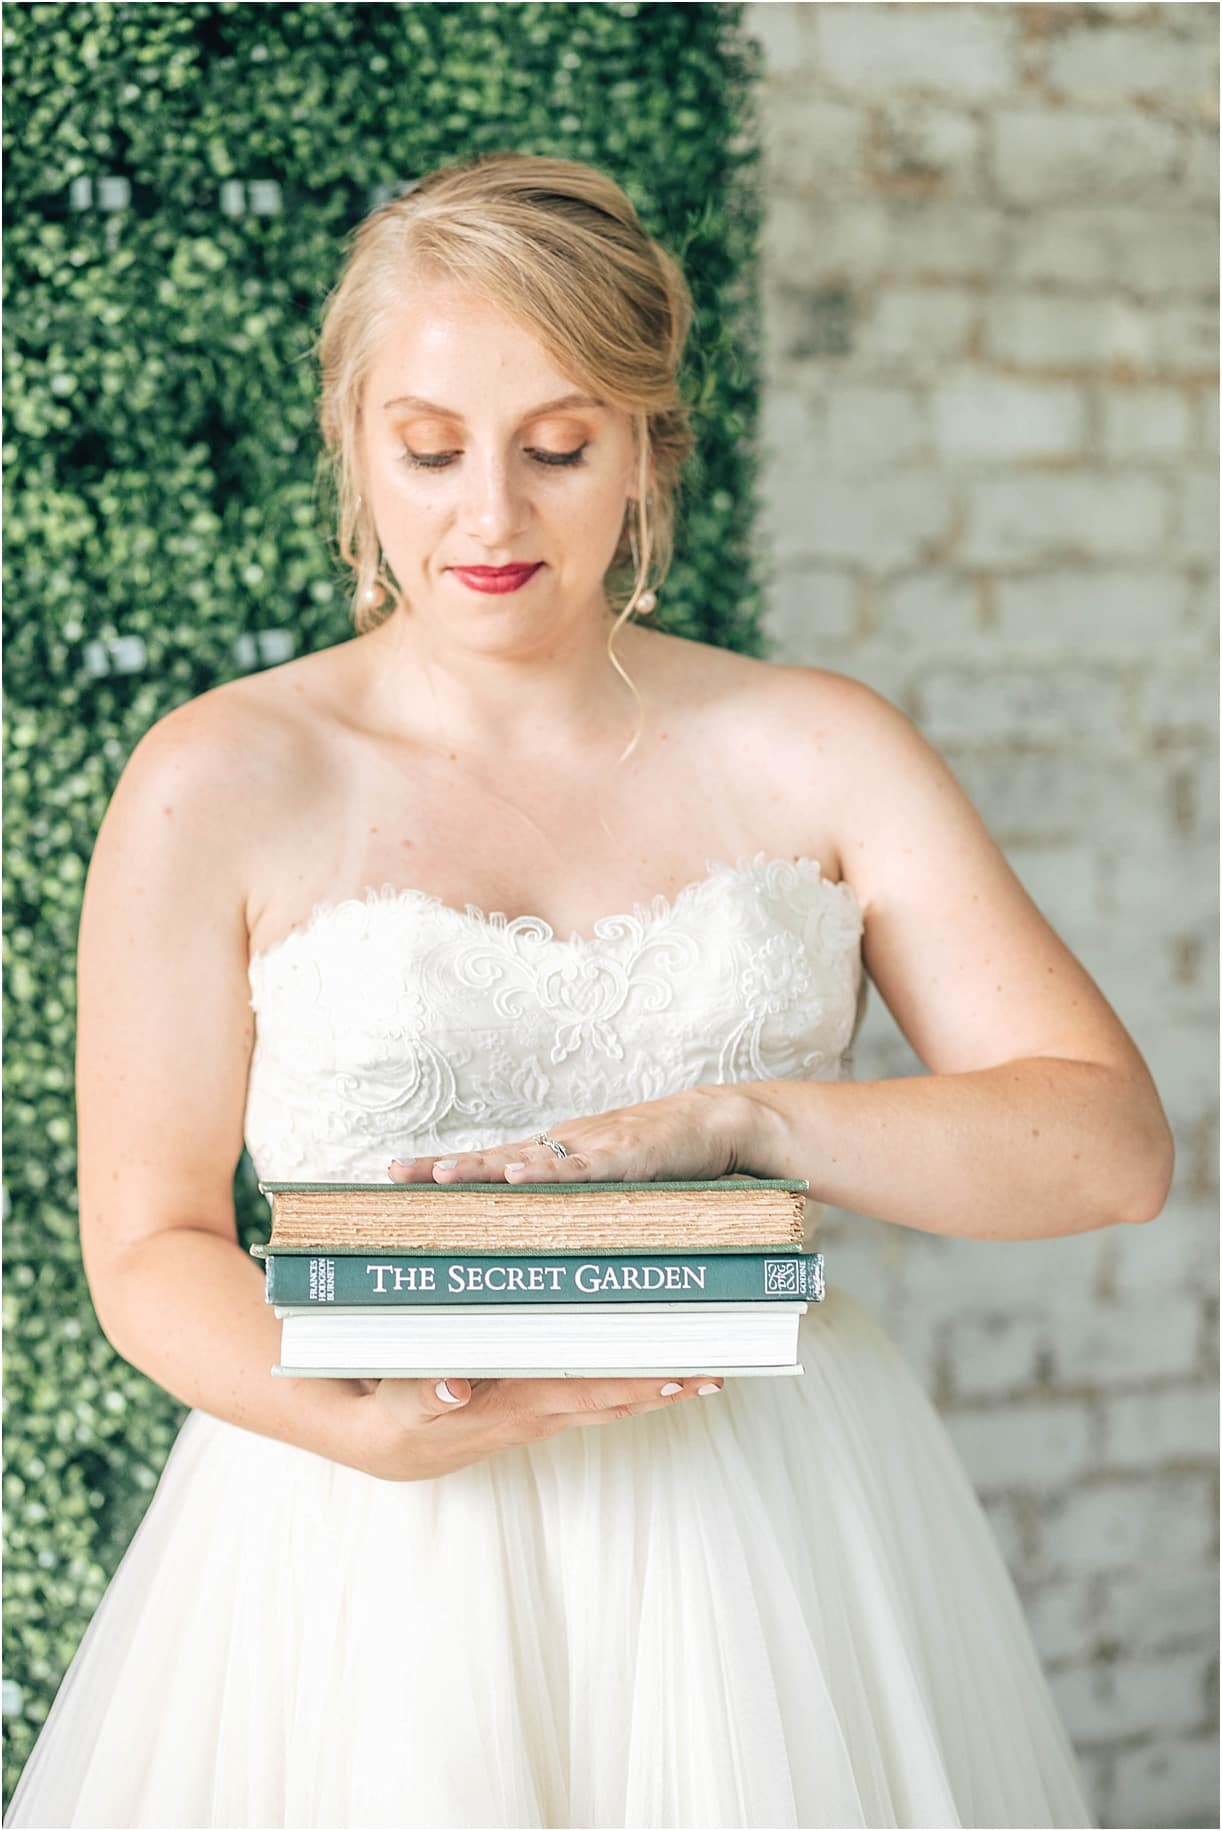 An Intimate Secret Garden Wedding in Virginia | Hill City Bride Virginia Wedding Inspiration Blog Book